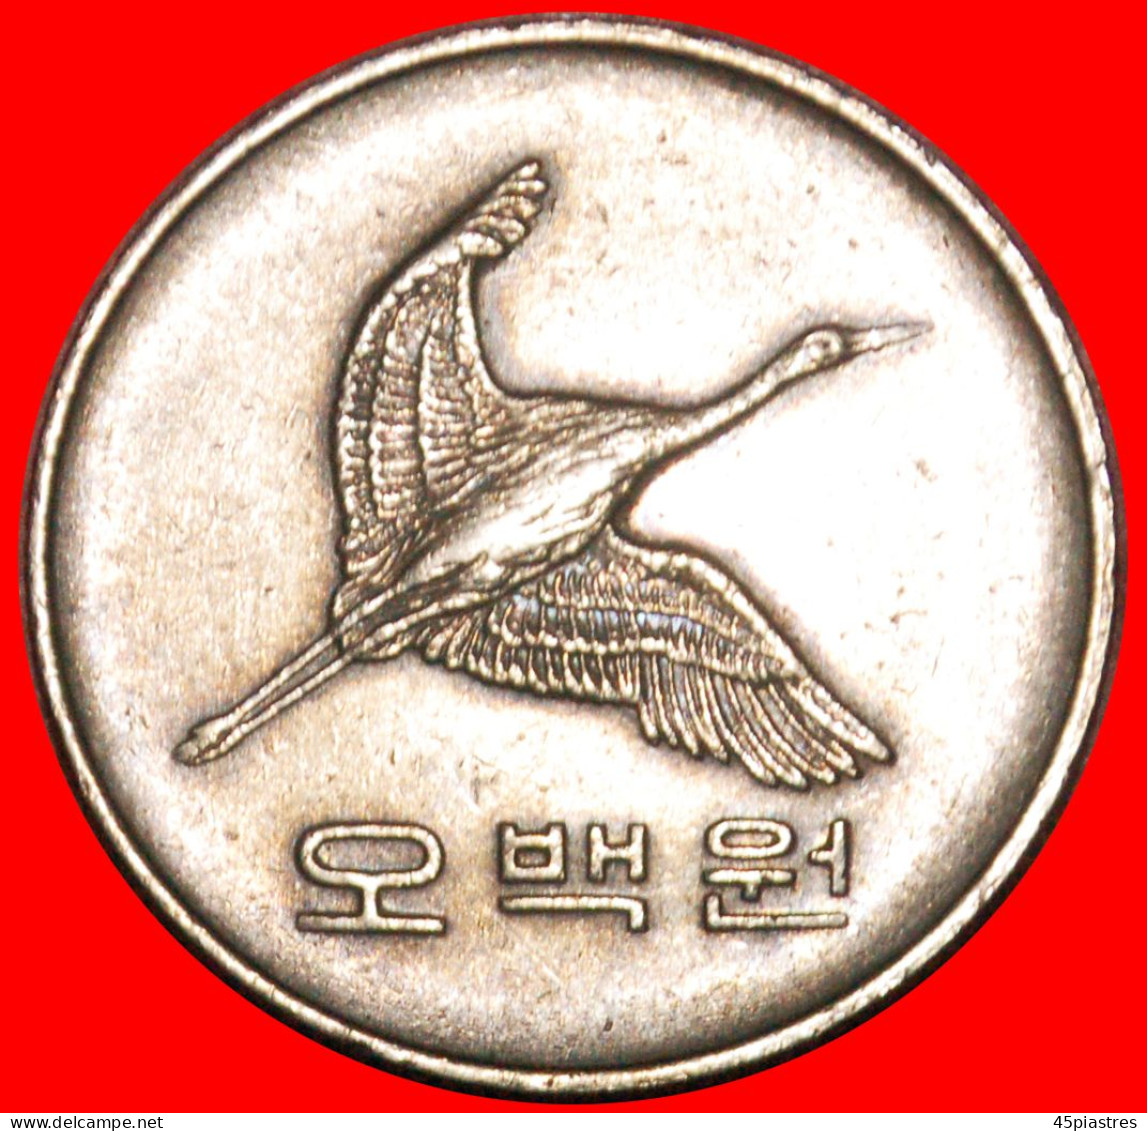 * MANCHURIAN CRANE (1982-2019): SOUTH KOREA  500 WON 1984! ·  LOW START · NO RESERVE! - Korea, South